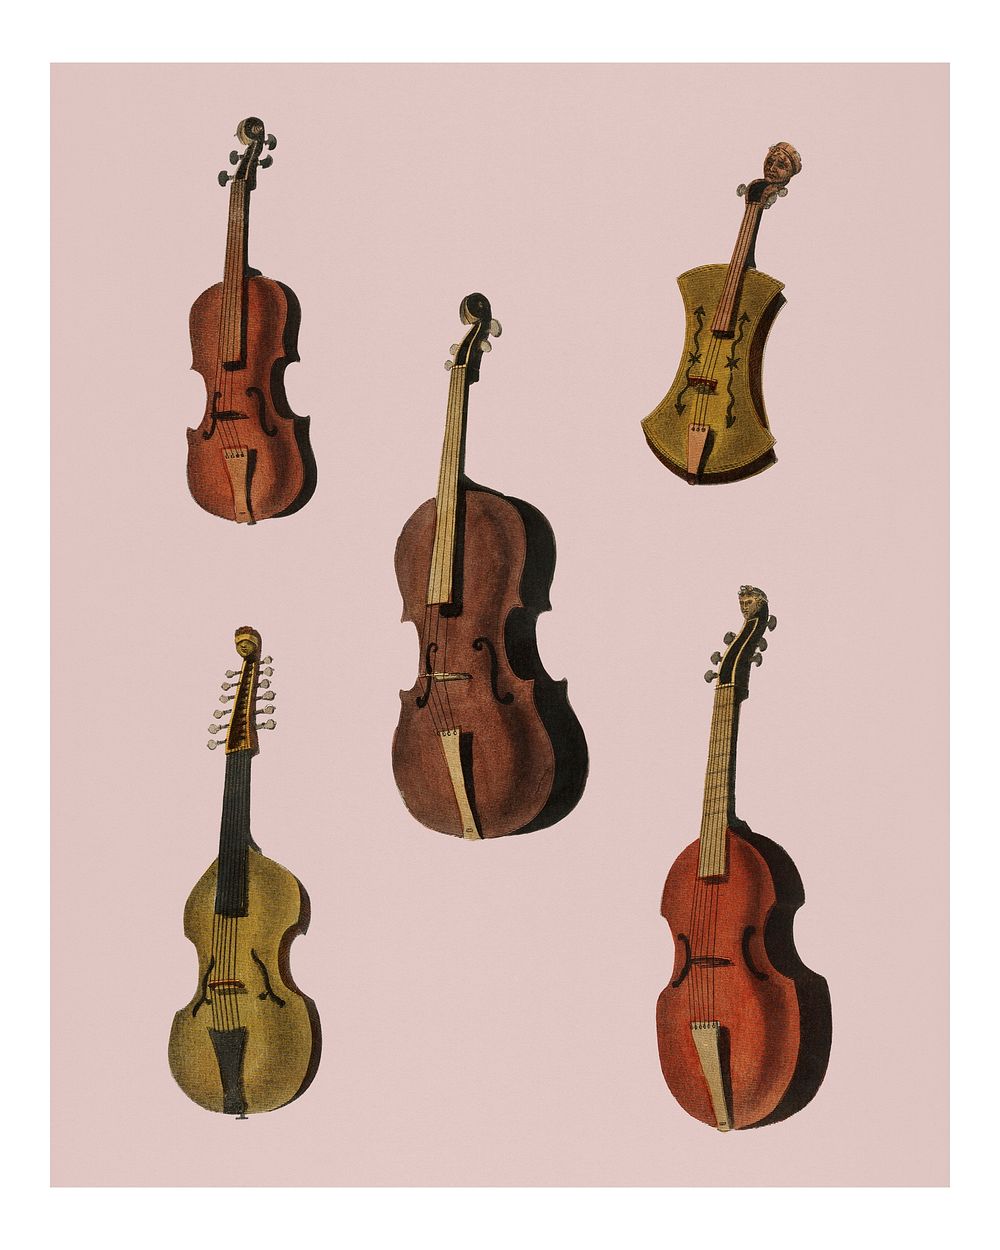 Antique violin, viola, cello illustrations  wall art print and poster.